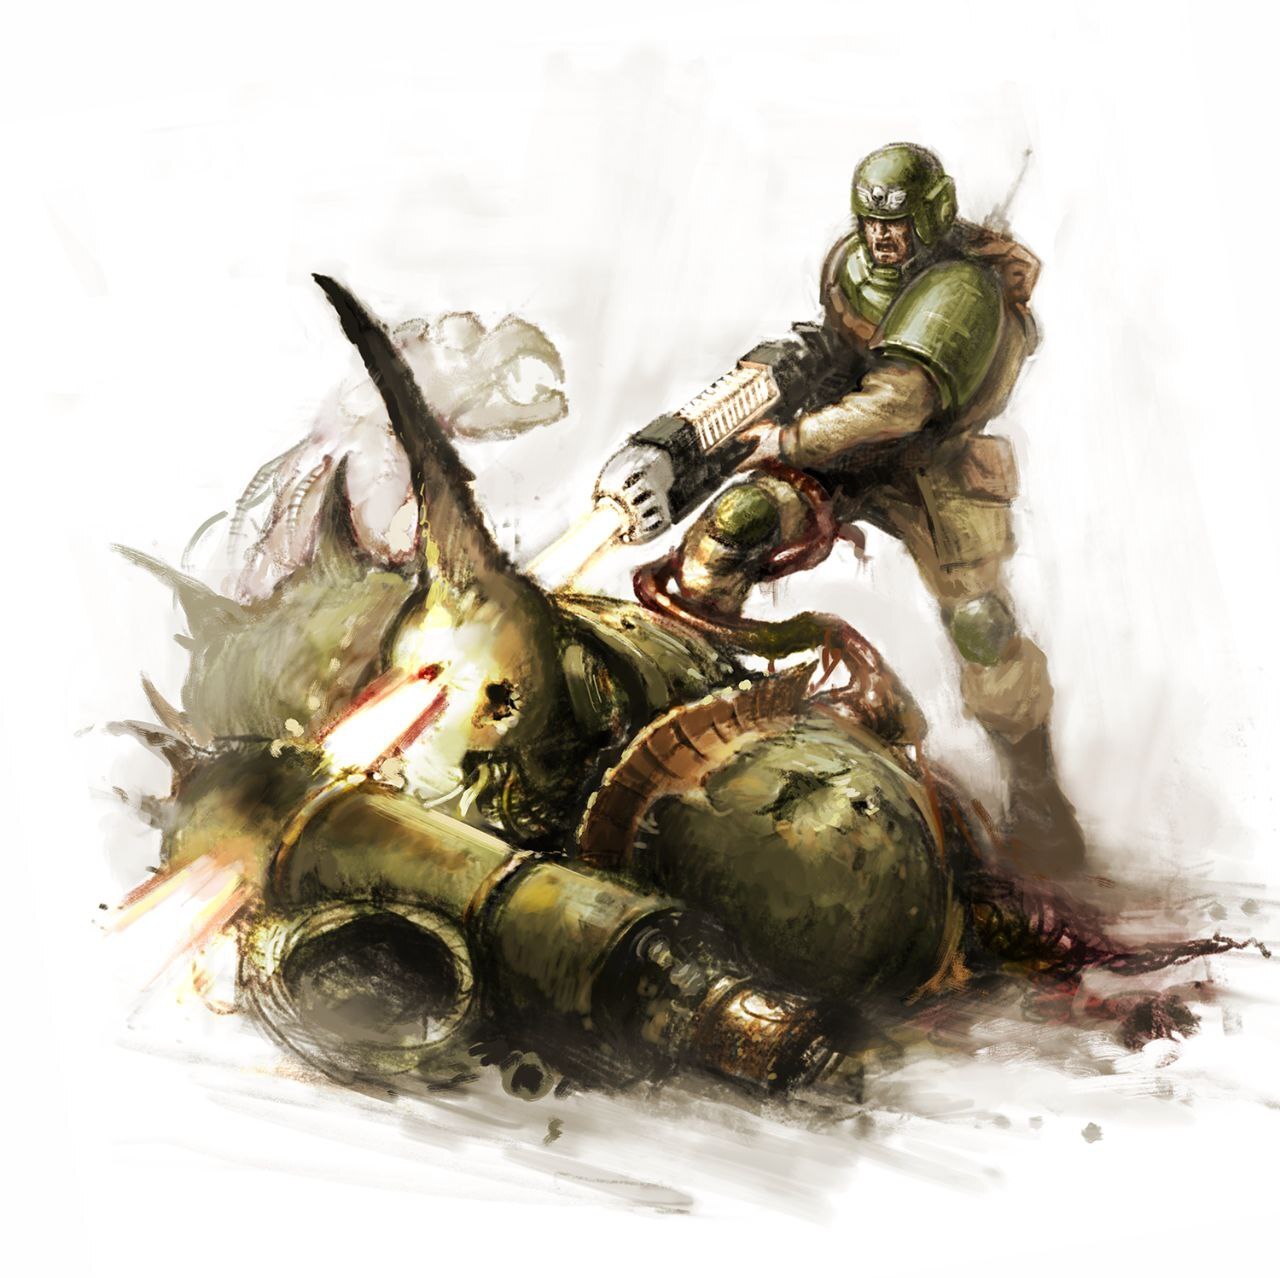 Warhammer 40k artwork — Death Guard